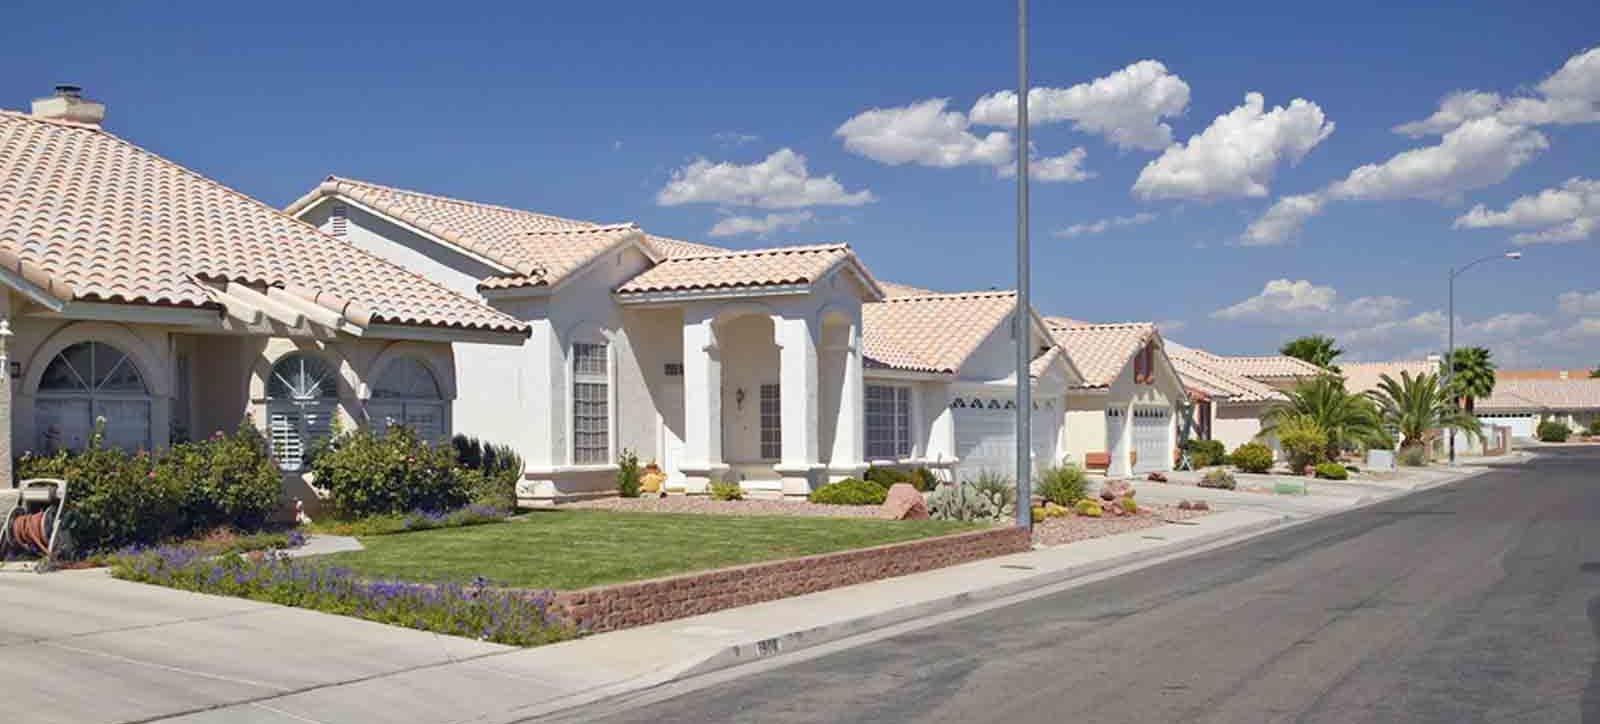 Las Vegas Homes for Sale